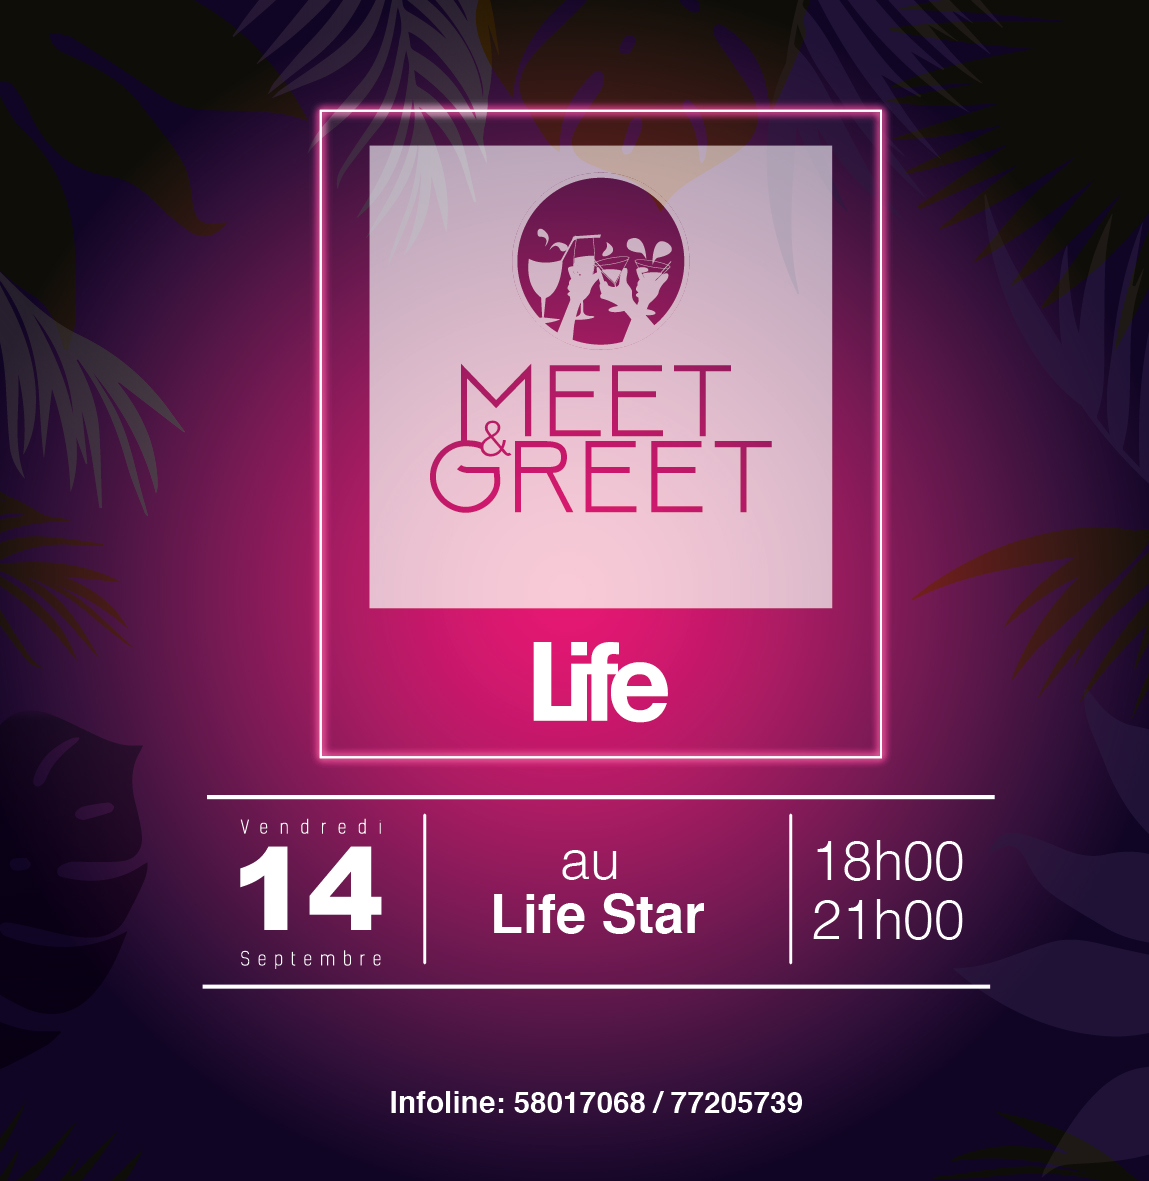 Life #144 meet & greet propo1-01